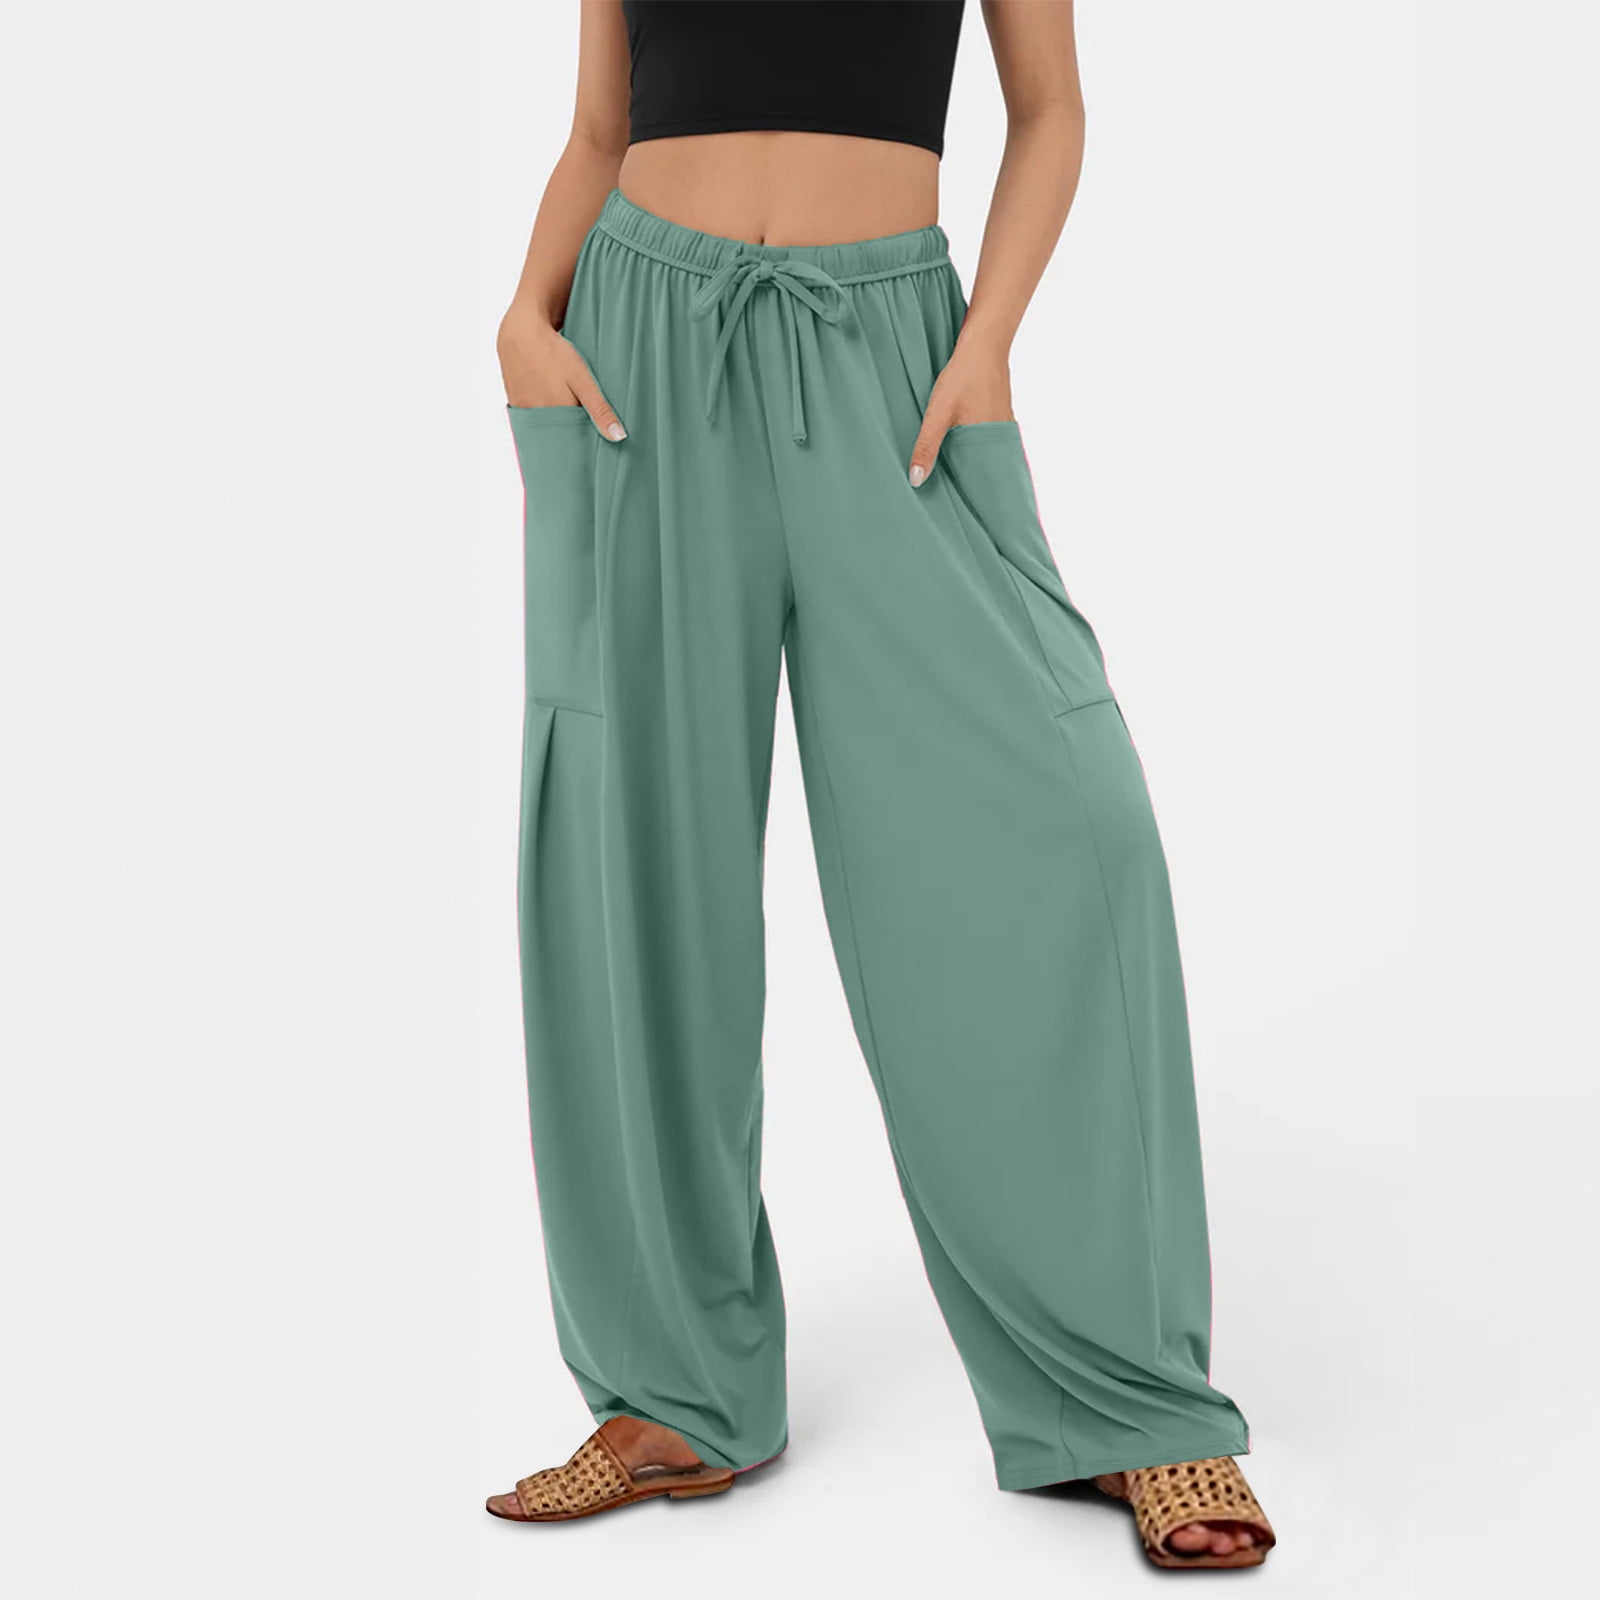 MIVAMIYA Palazzo Pants for Women Comfy Linen Drawstring Wide Leg Lounge  Pants Plus Size Yoga Pajama Trousers S-3XL